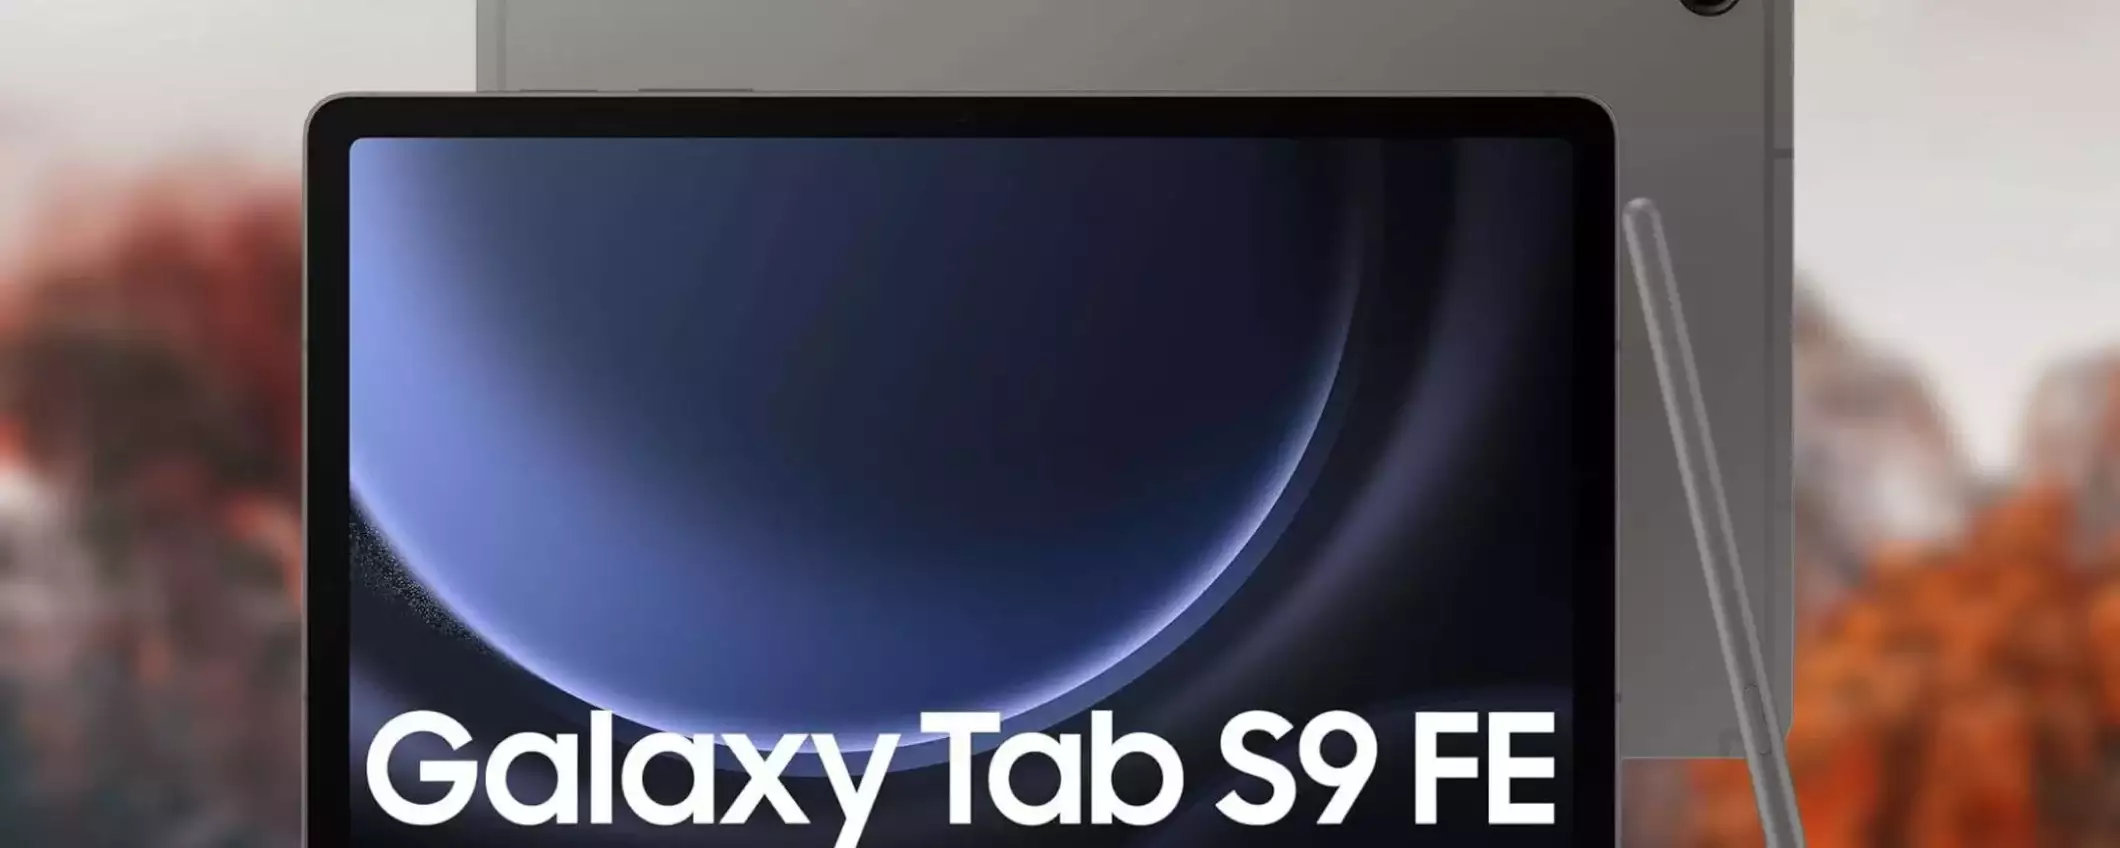 Samsung Galaxy Tab S9 FE (6+128 GB): oggi costa solo 399€ su Amazon